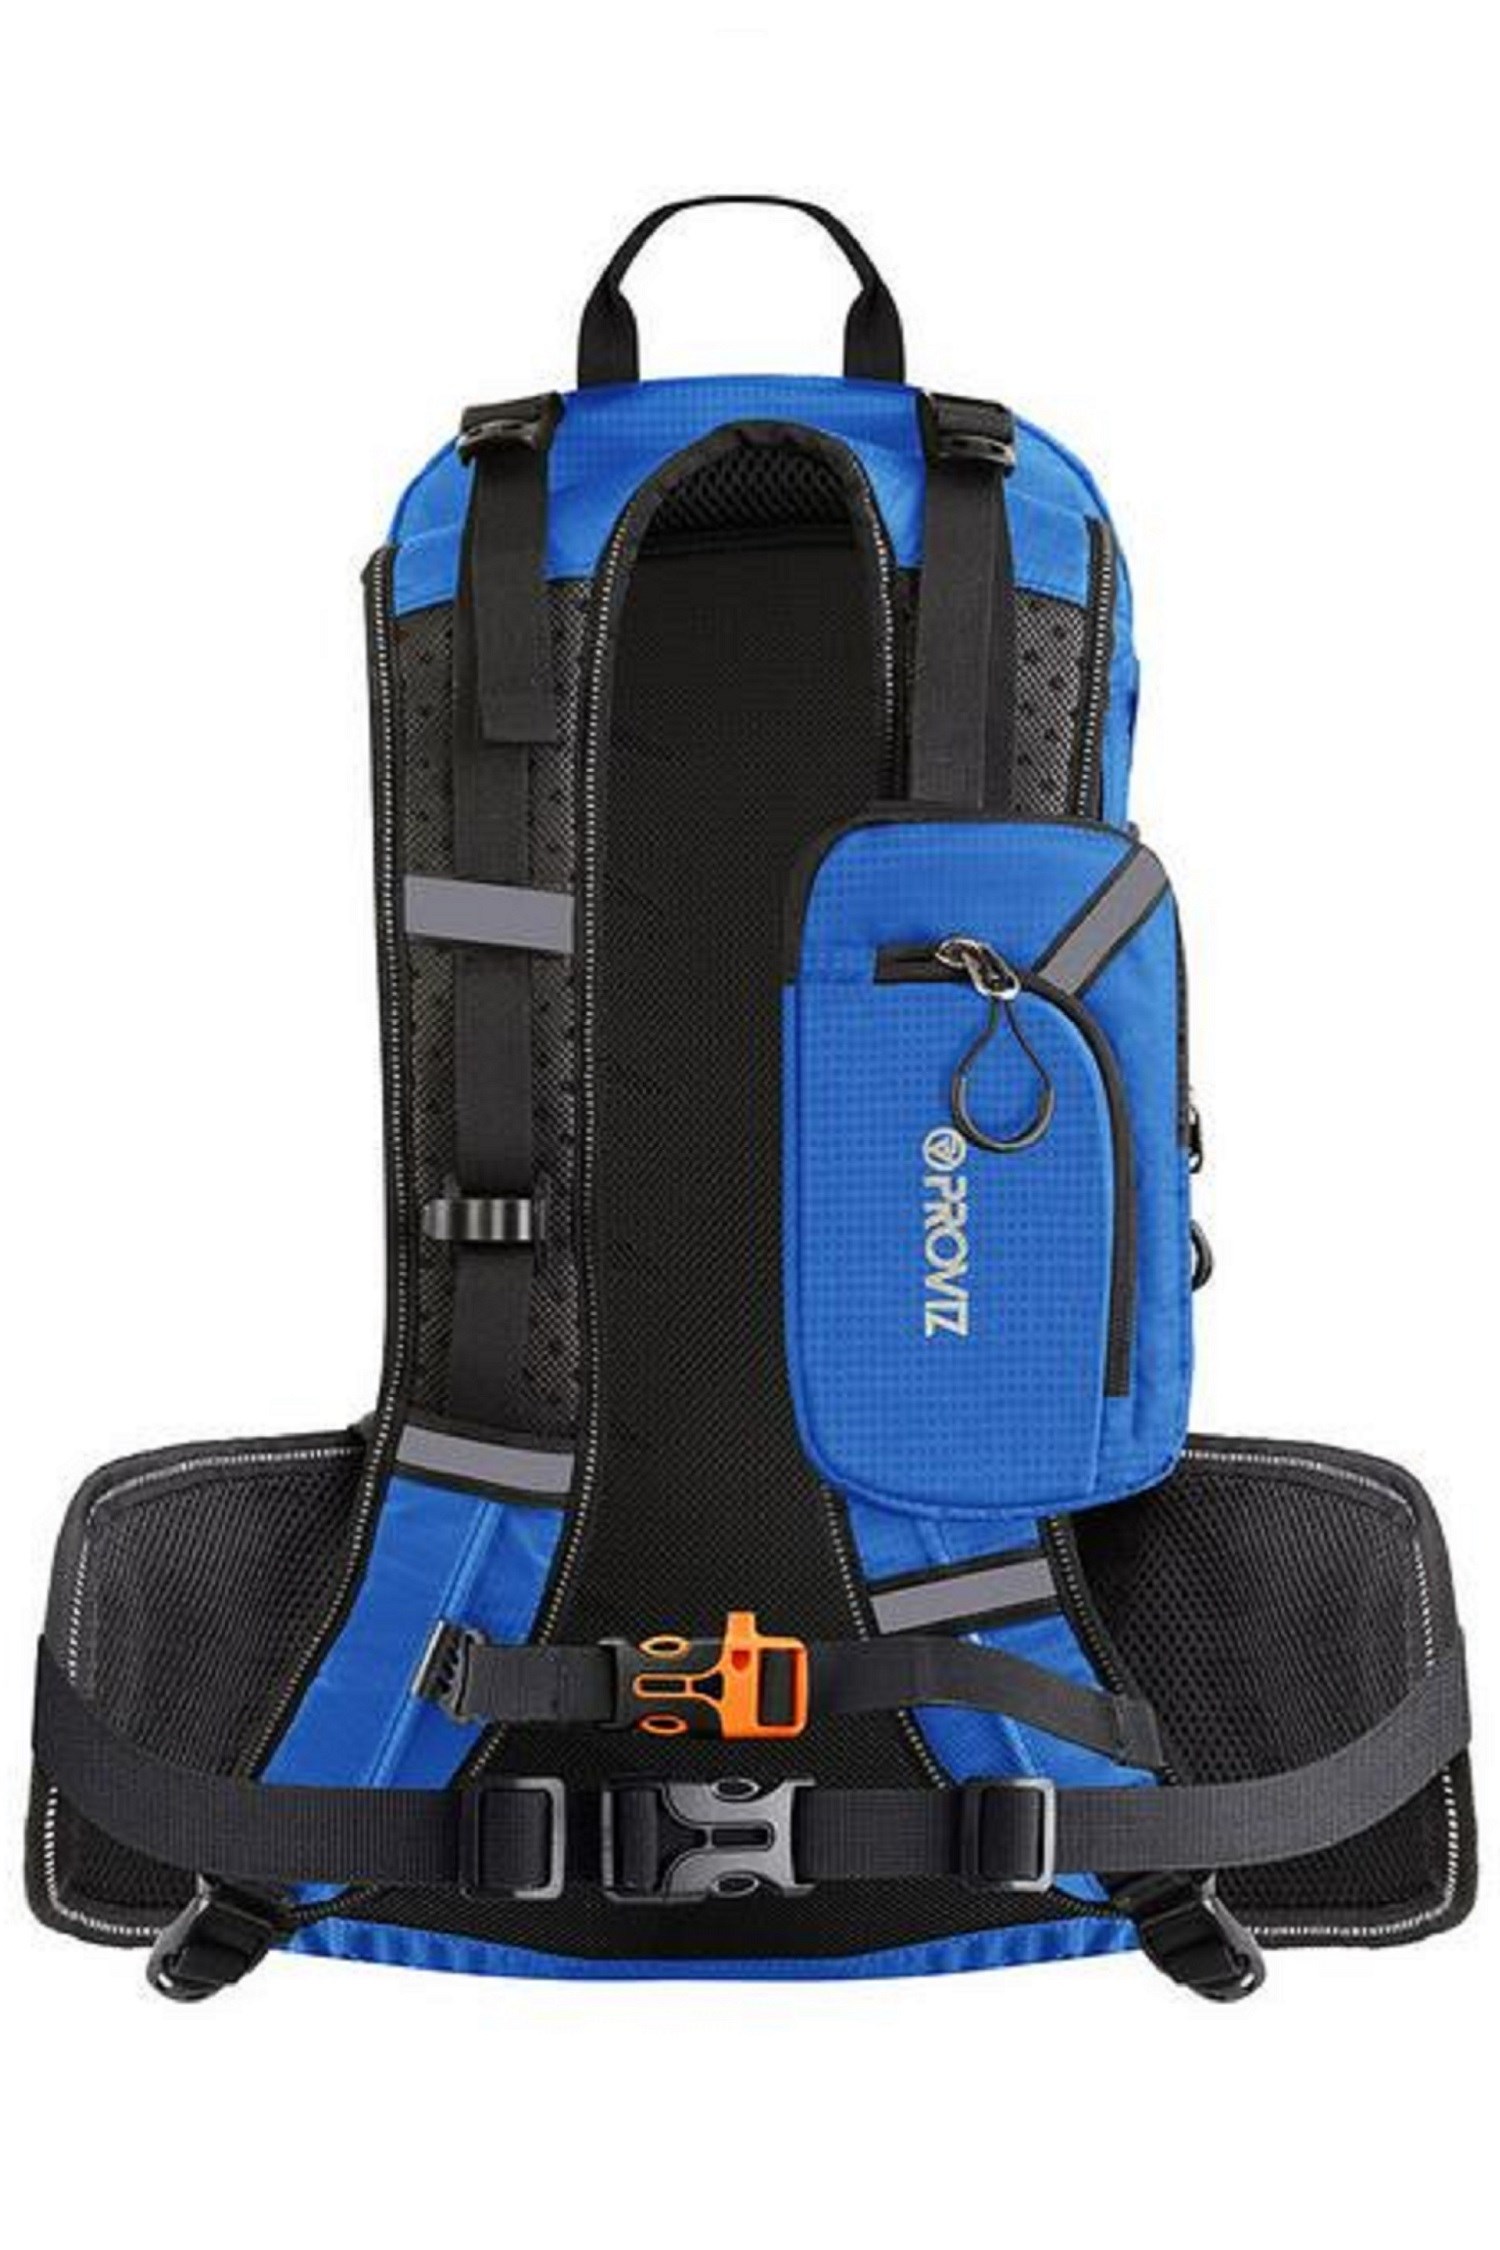 Proviz REFLECT360 Touring Reflective Backpack Bag Rucksack 20L For Multi  Sports